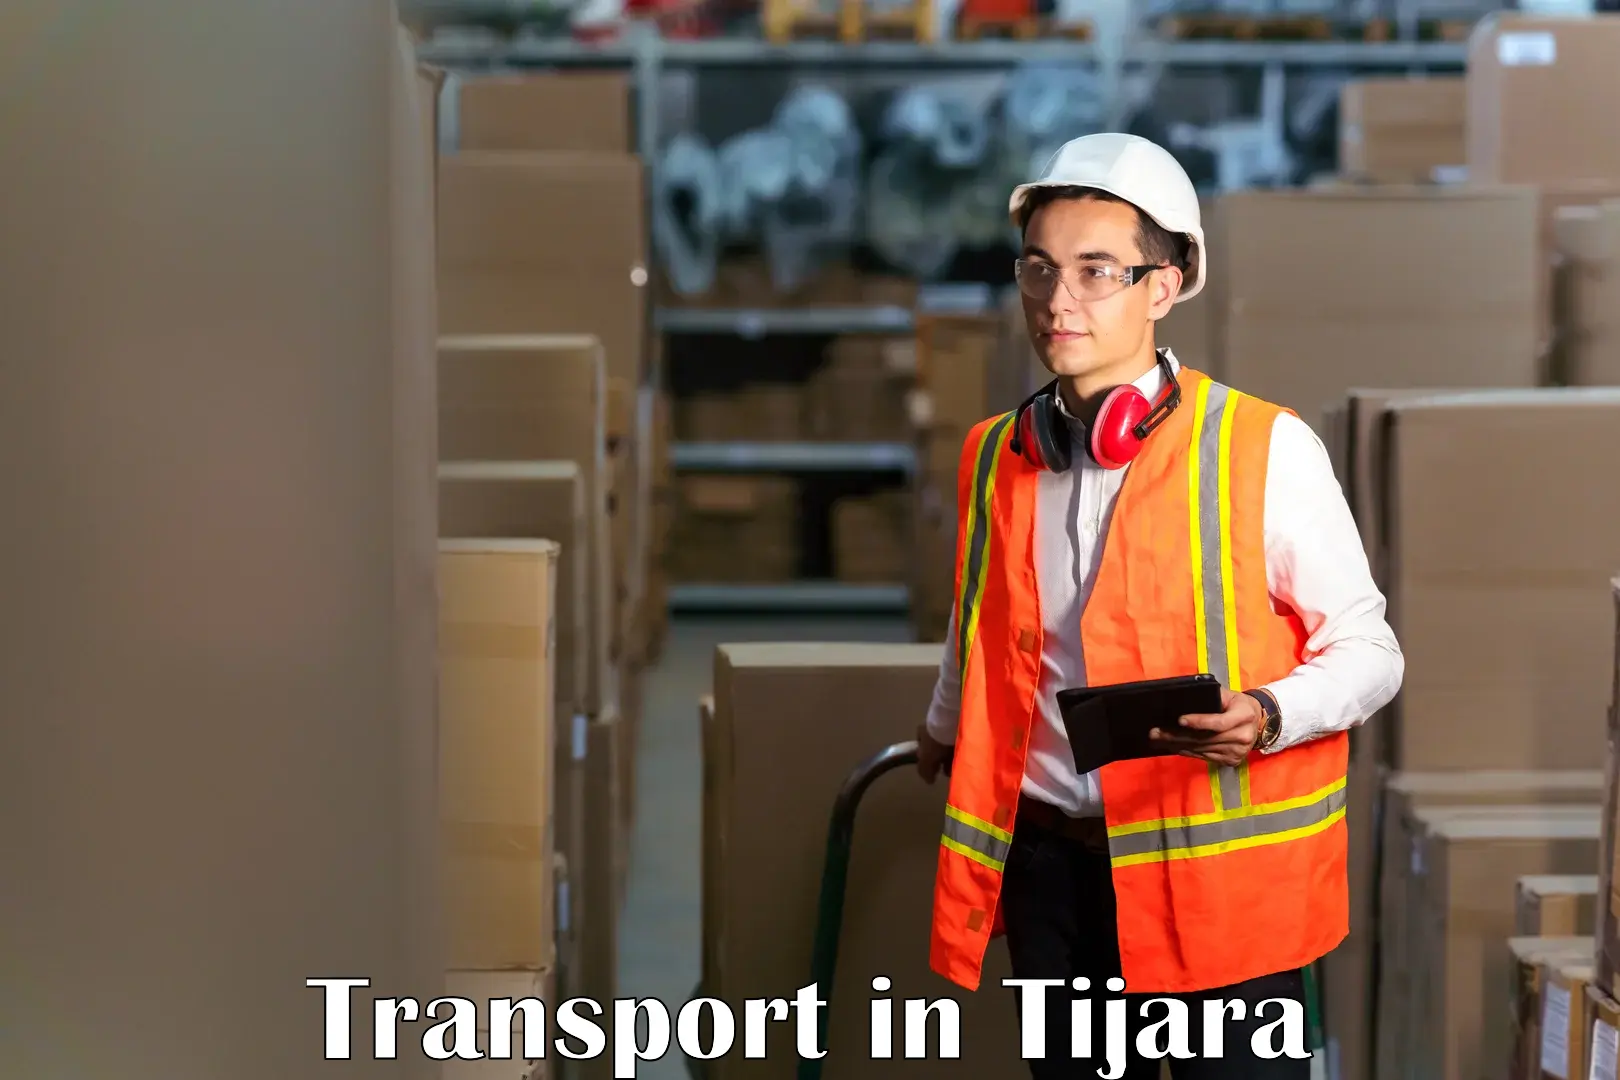 Truck transport companies in India in Tijara